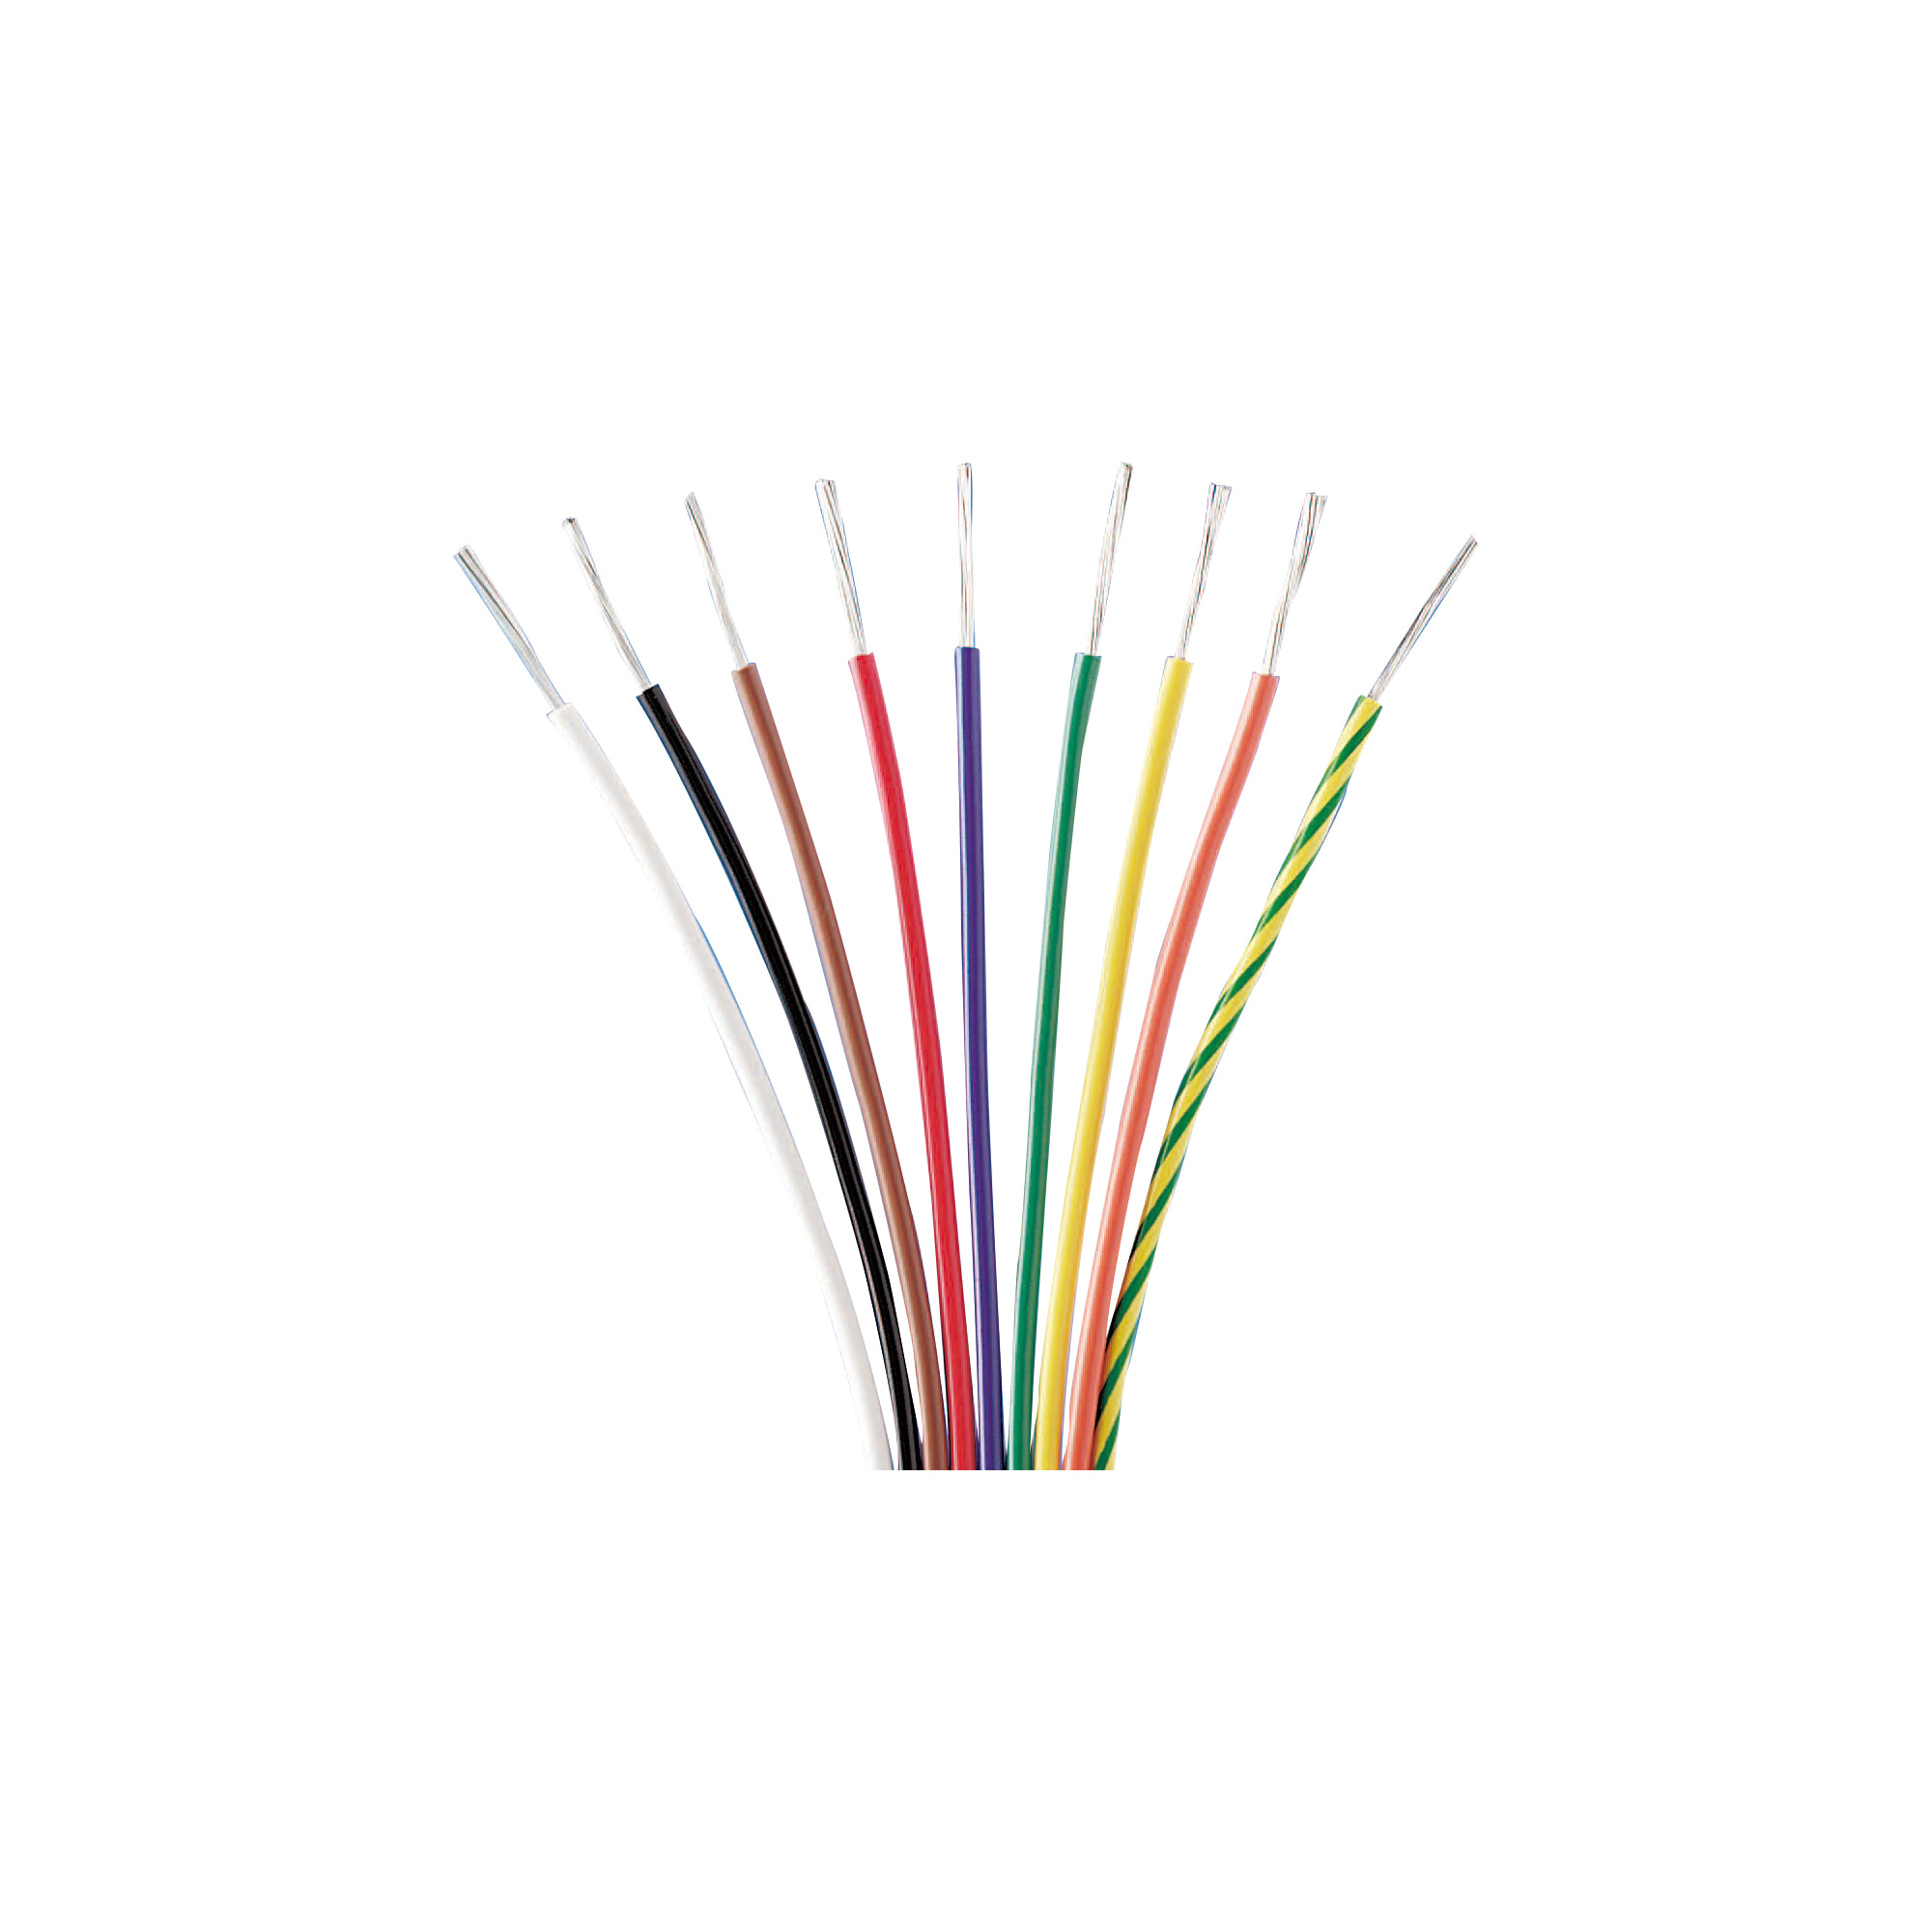 UL1015-14-YG-50, Hook-Up Wires - Single Core, UL 1015, 600V, MISUMI